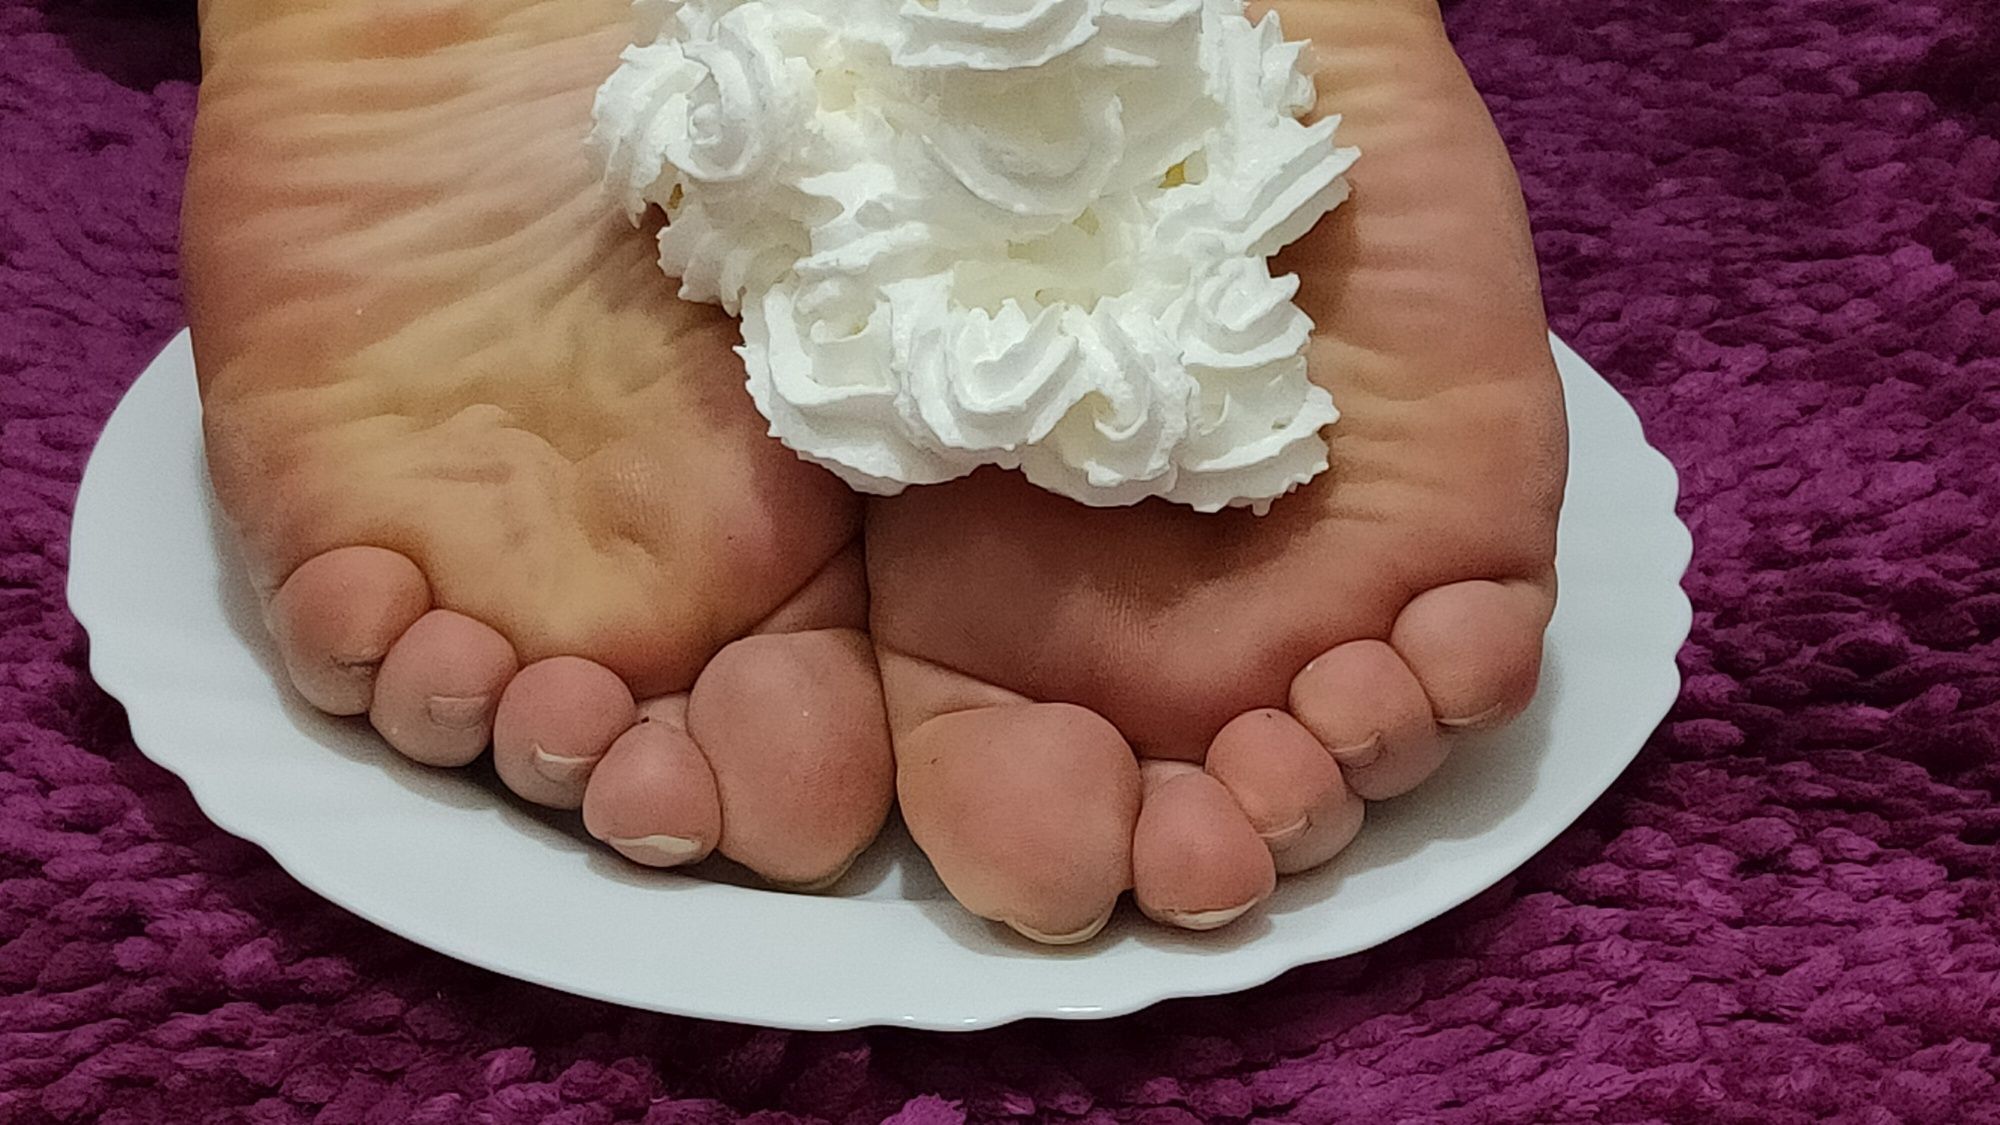 whipped cream on my feet #3